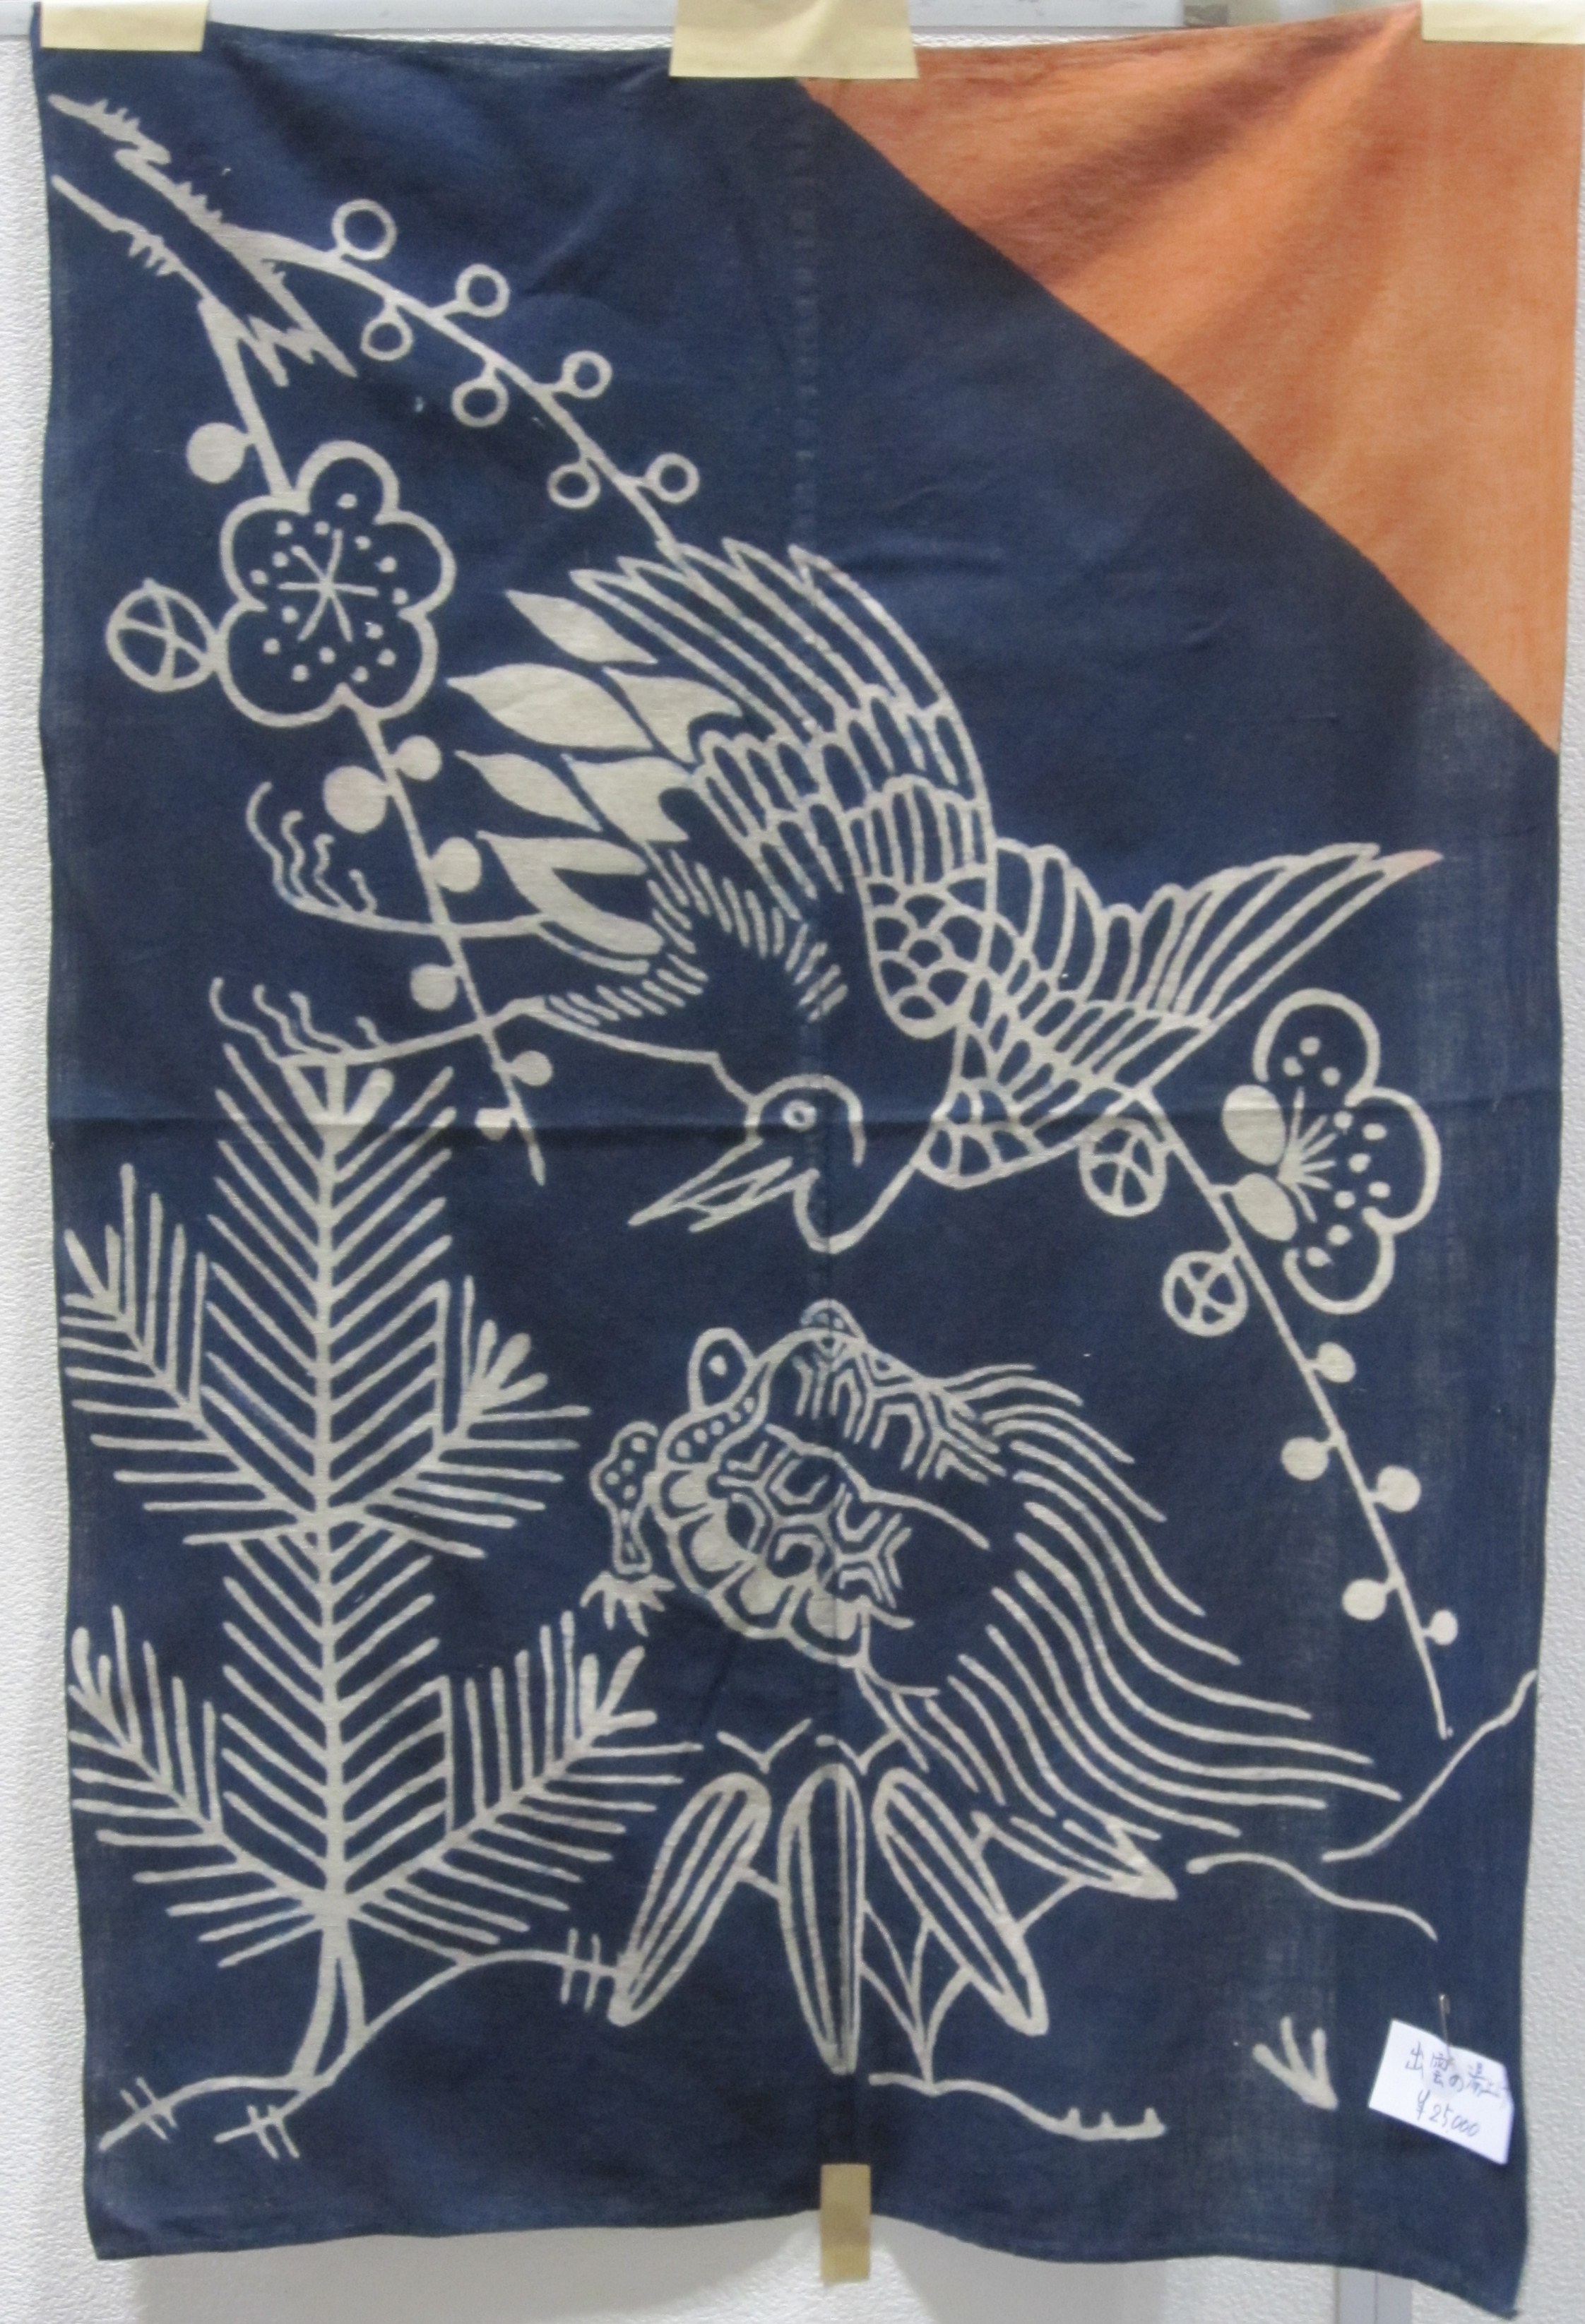 Sho Chiku Bai textile